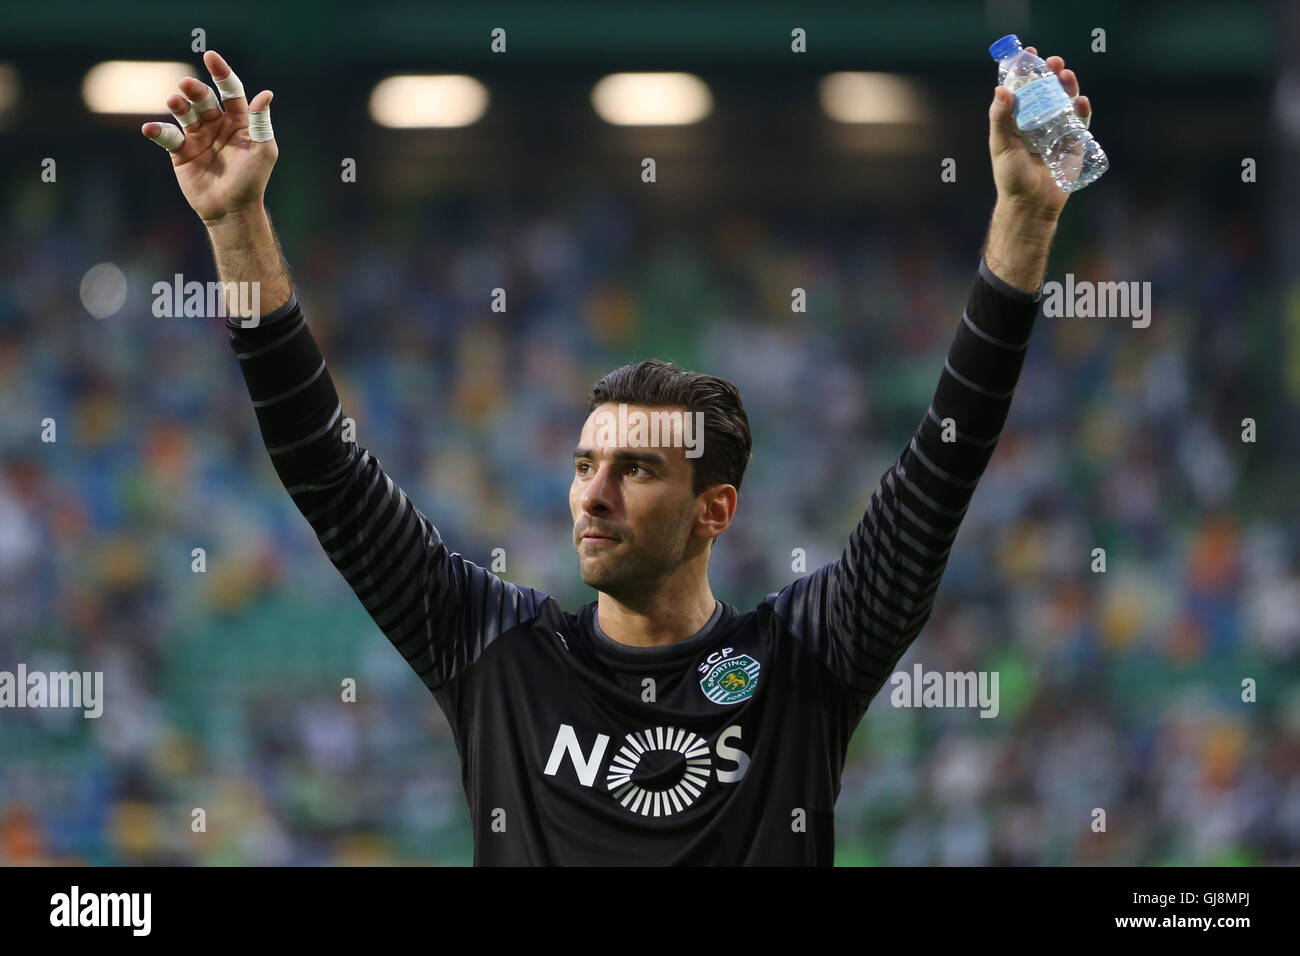 Lisbon, Portugal. 13th Aug, 2016. Sporting's goalkeeper Rui Patricio (1) waving to supporters Credit:  Alexandre de Sousa/Alamy Live News Stock Photo